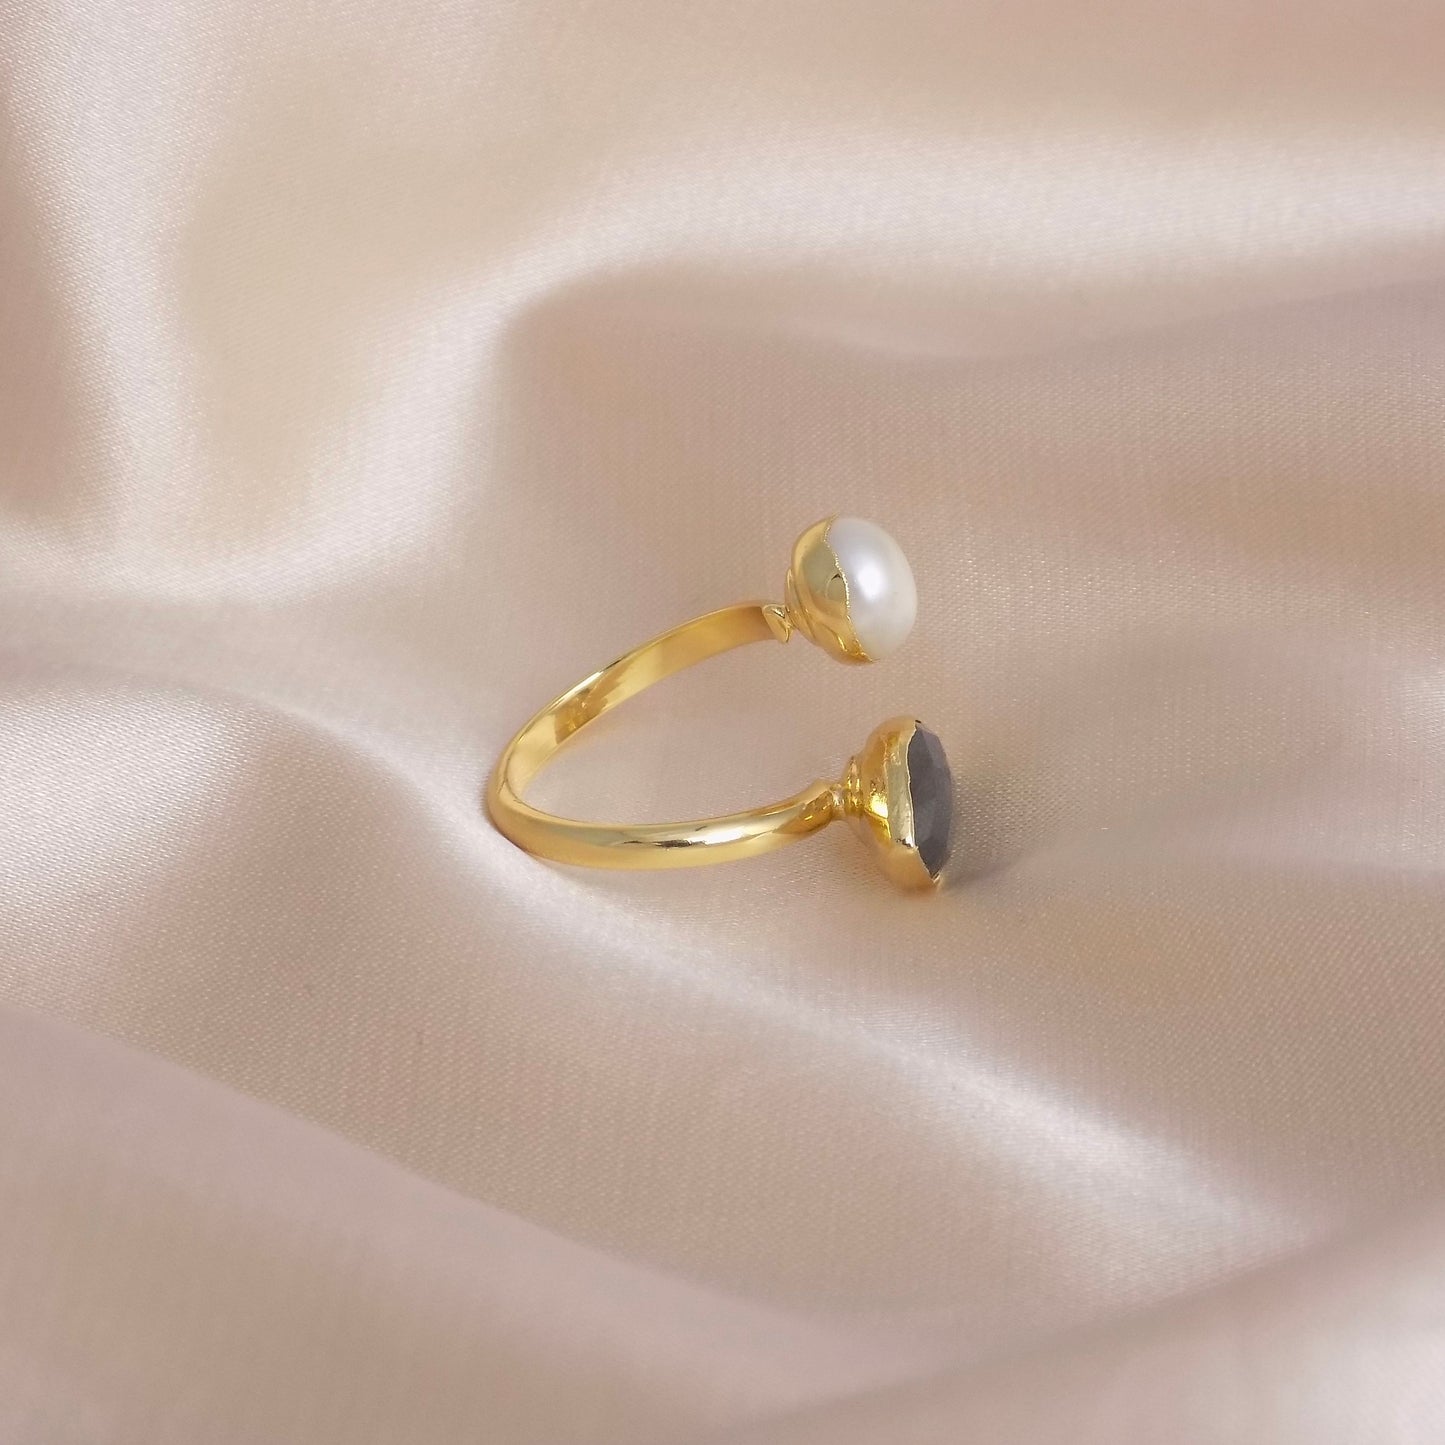 Gemstone Ring, Labradorite Ring, Freshwater Pearl Ring Crystal, Raw Stones Gold Plated Statement, Mom Gift Women, M6-746